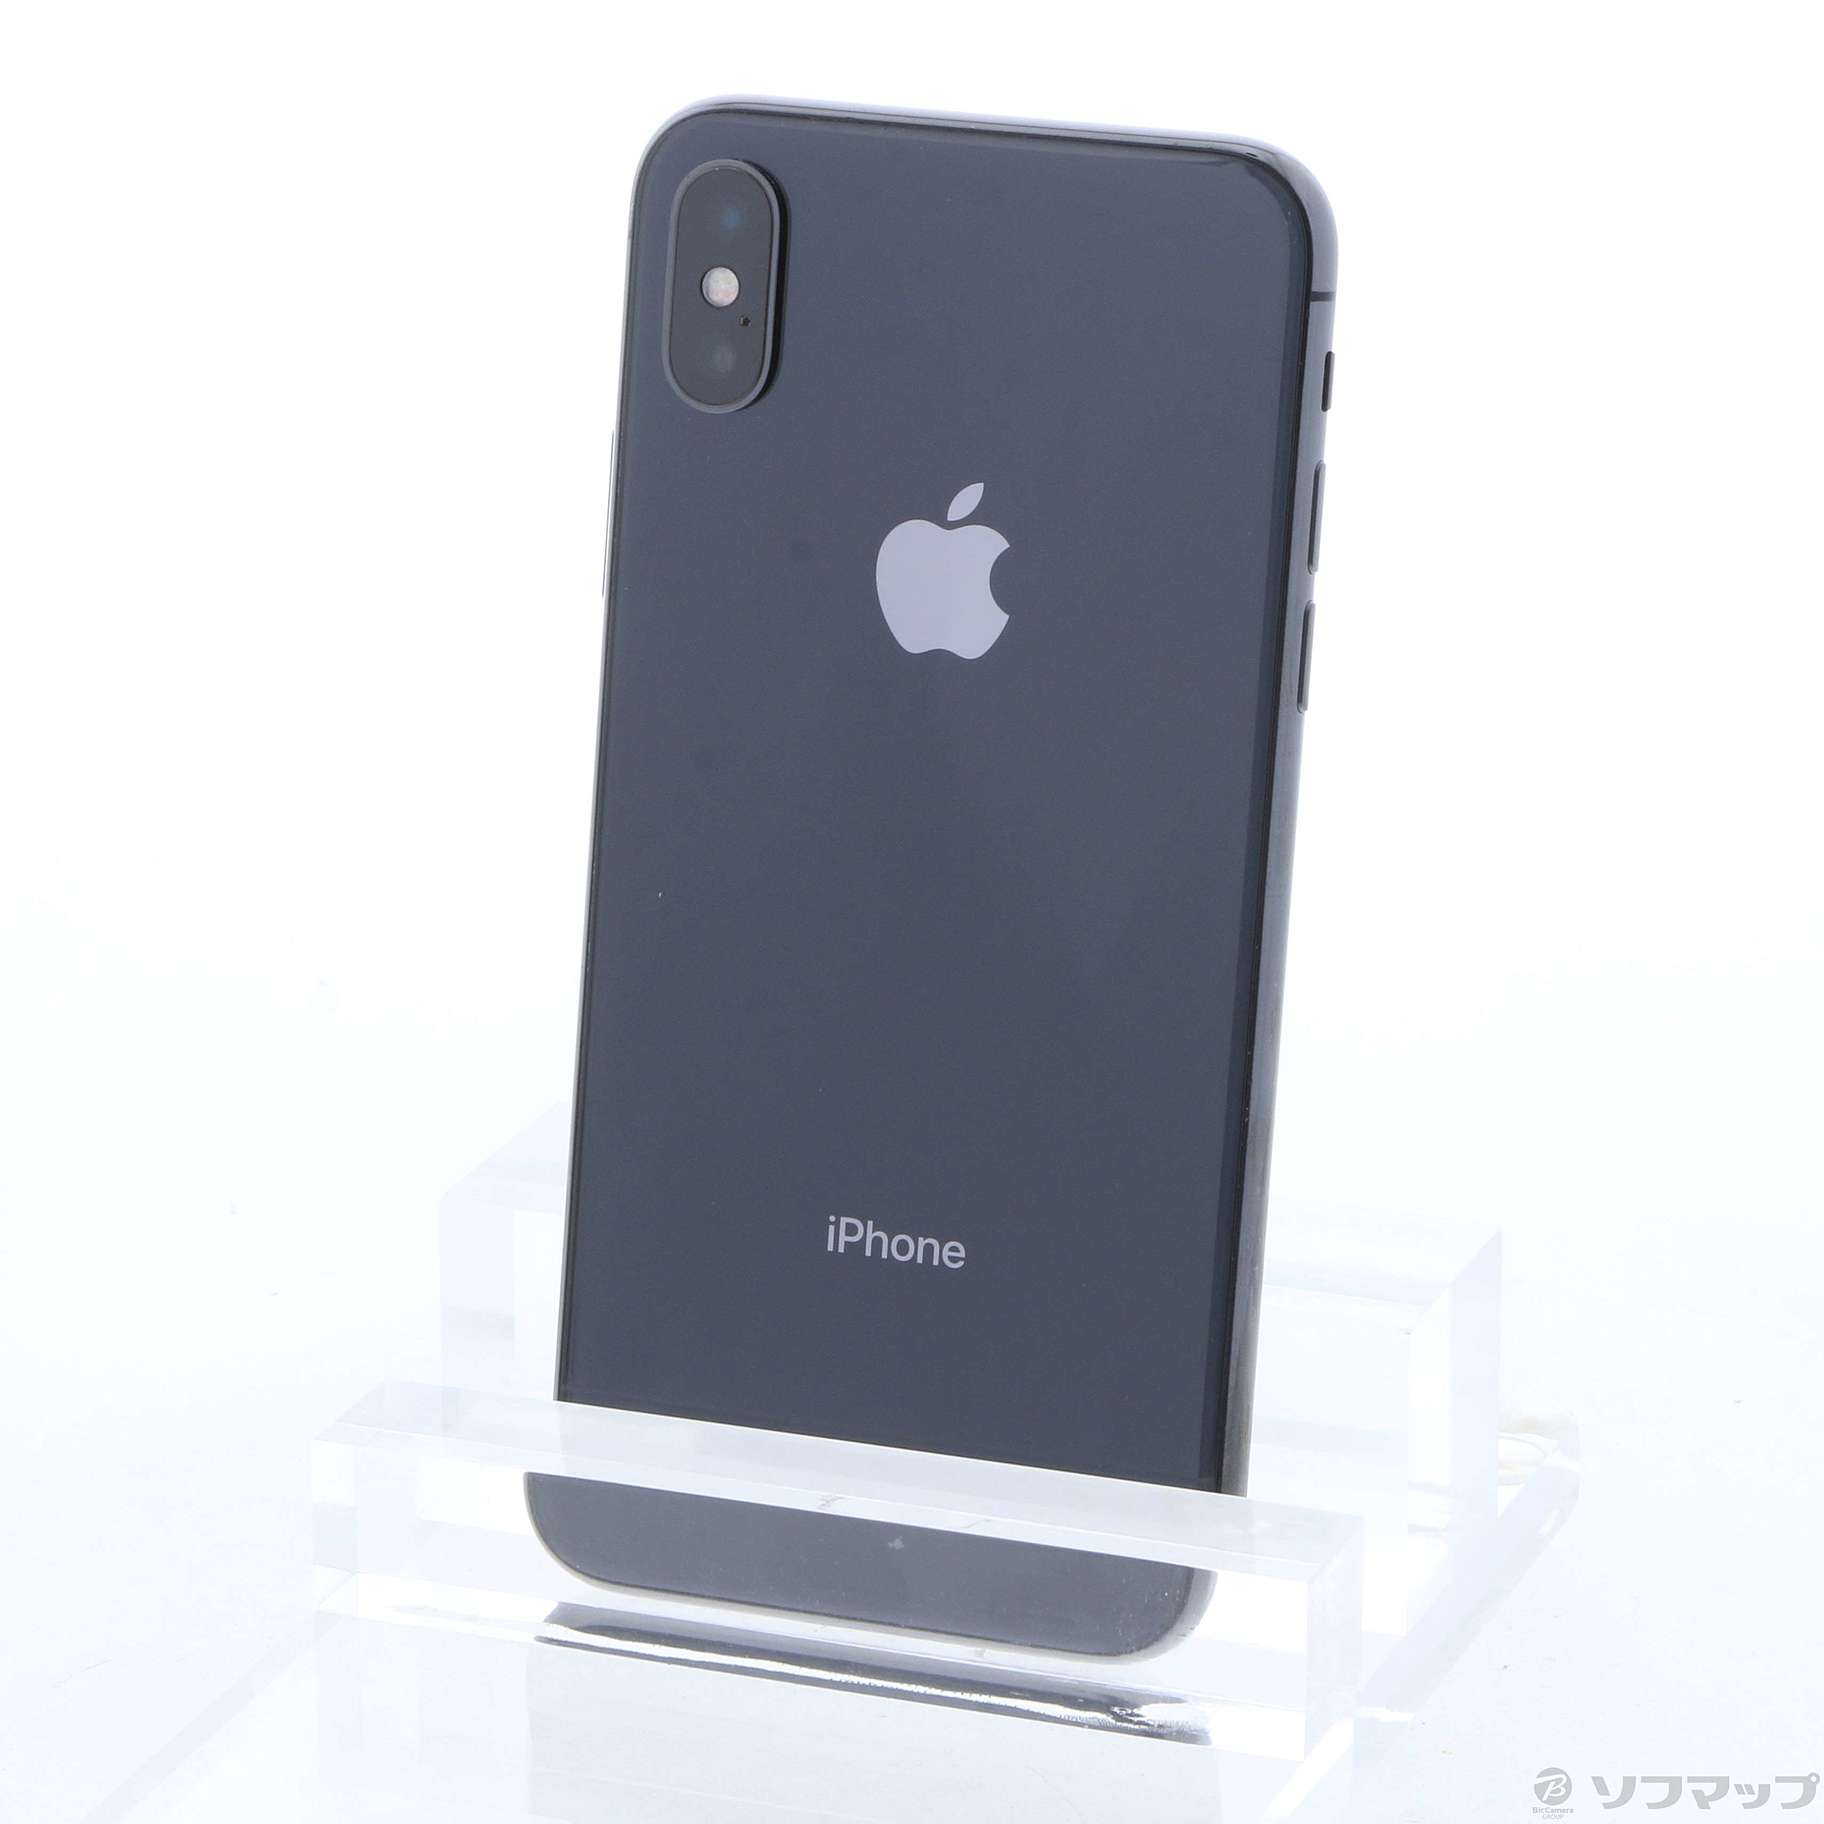 SIMフリー iPhone X スペースグレイ 64GB MQAX2J/A利用制限〇バッテリー最大容量